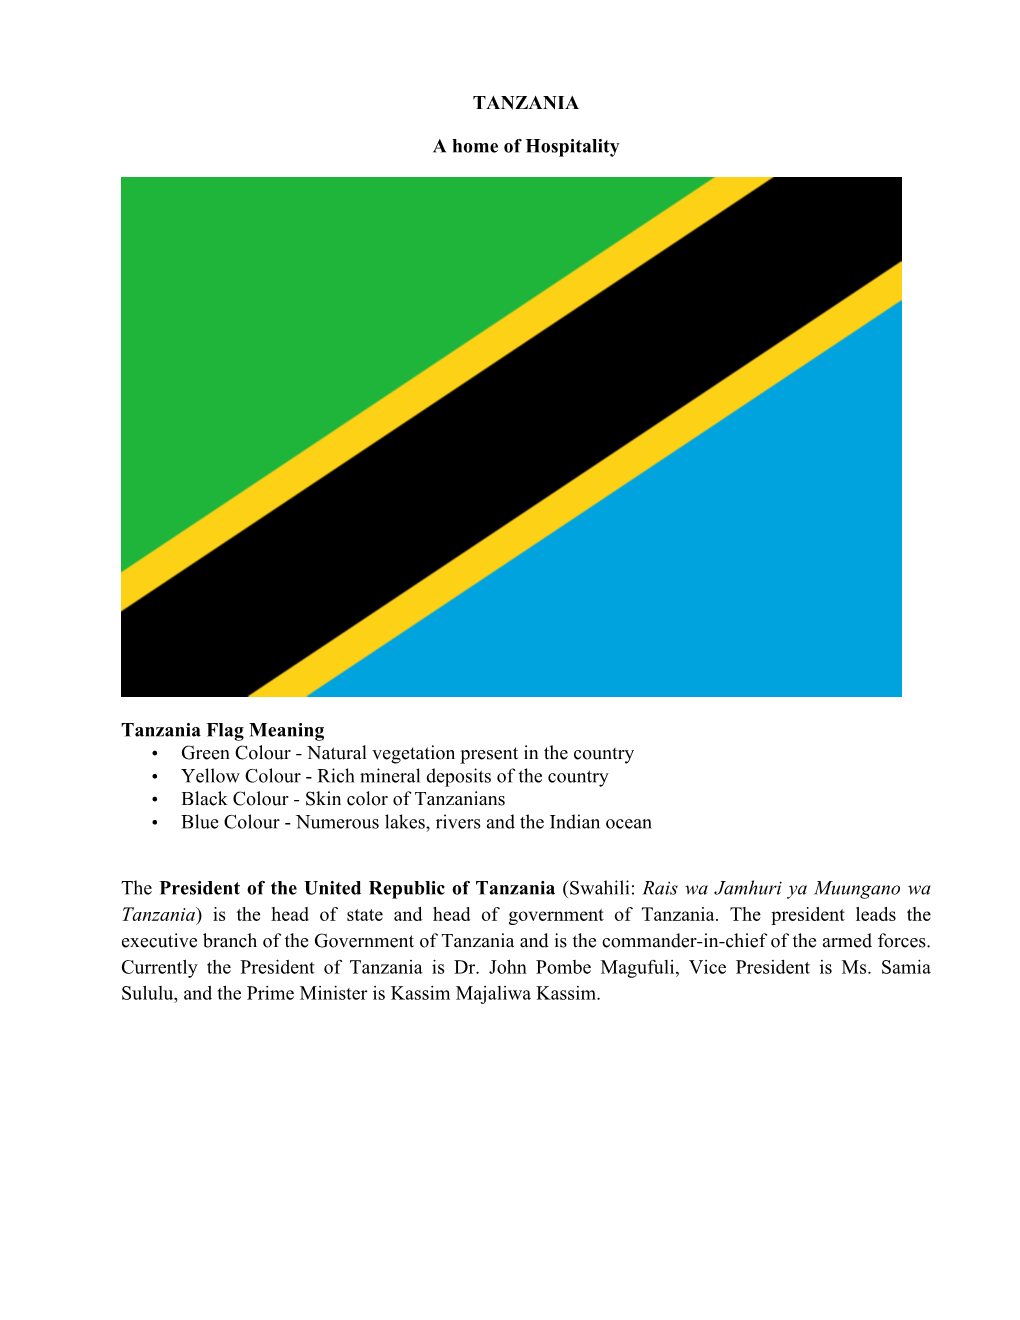 TANZANIA Country Report.Pdf